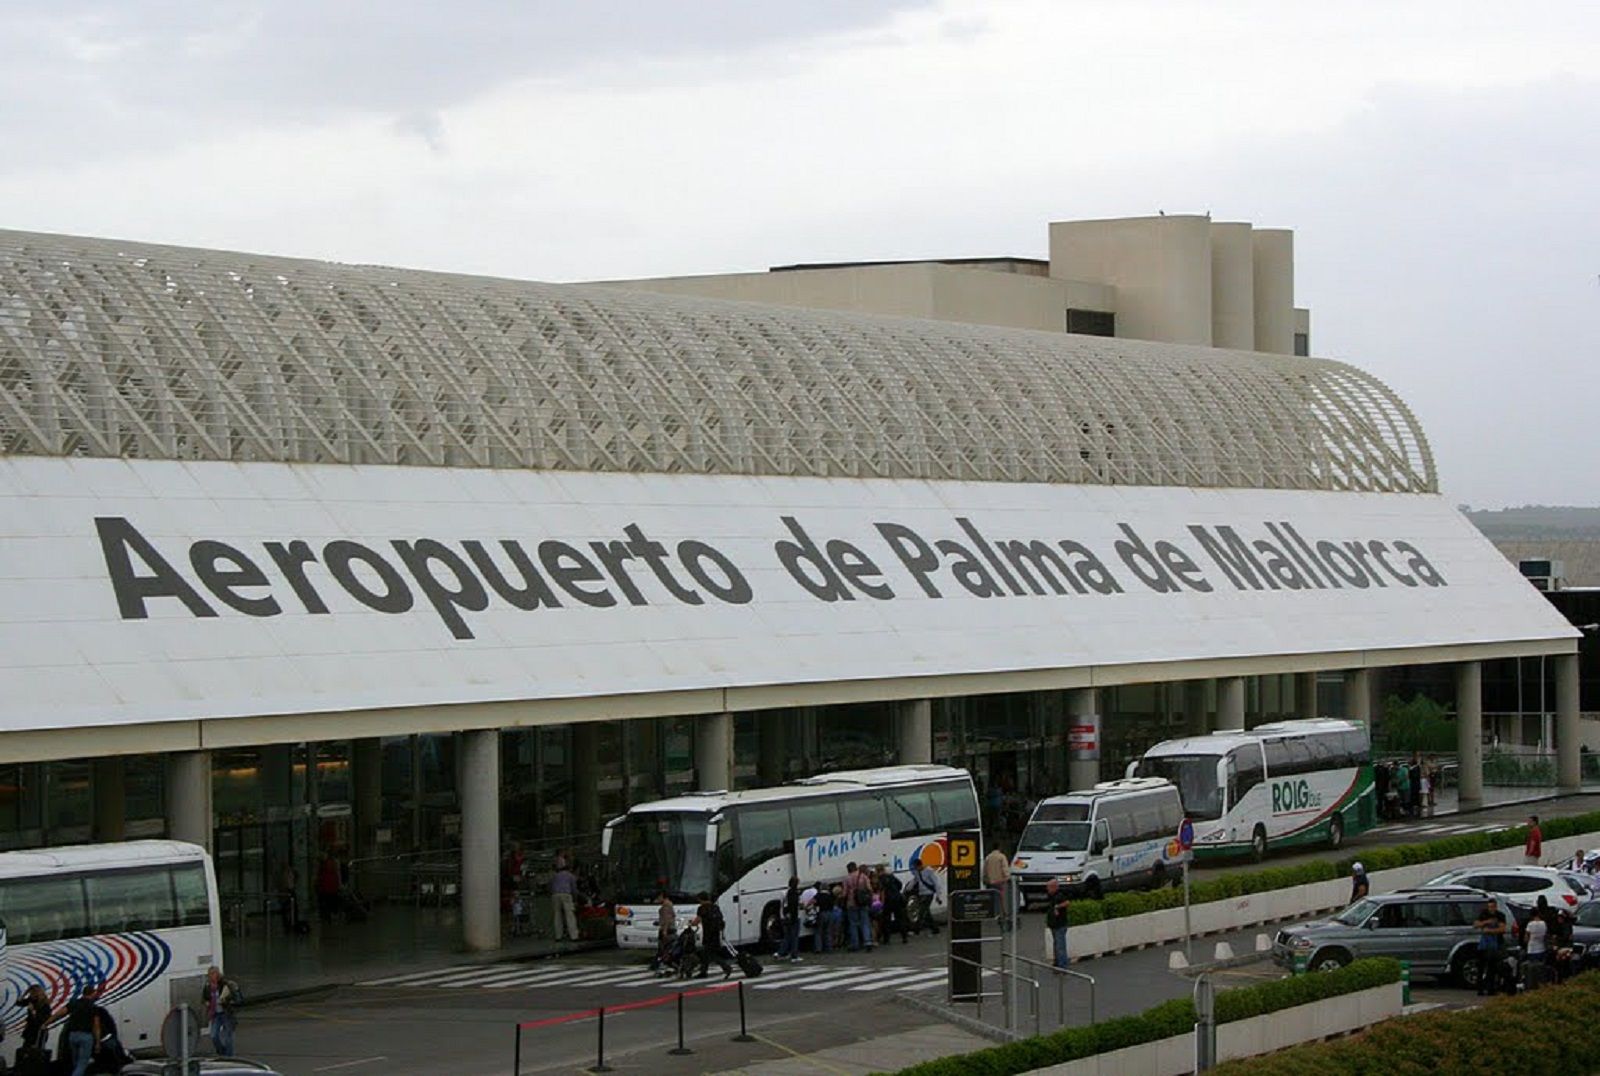 Aeroport Palma de Mallorca